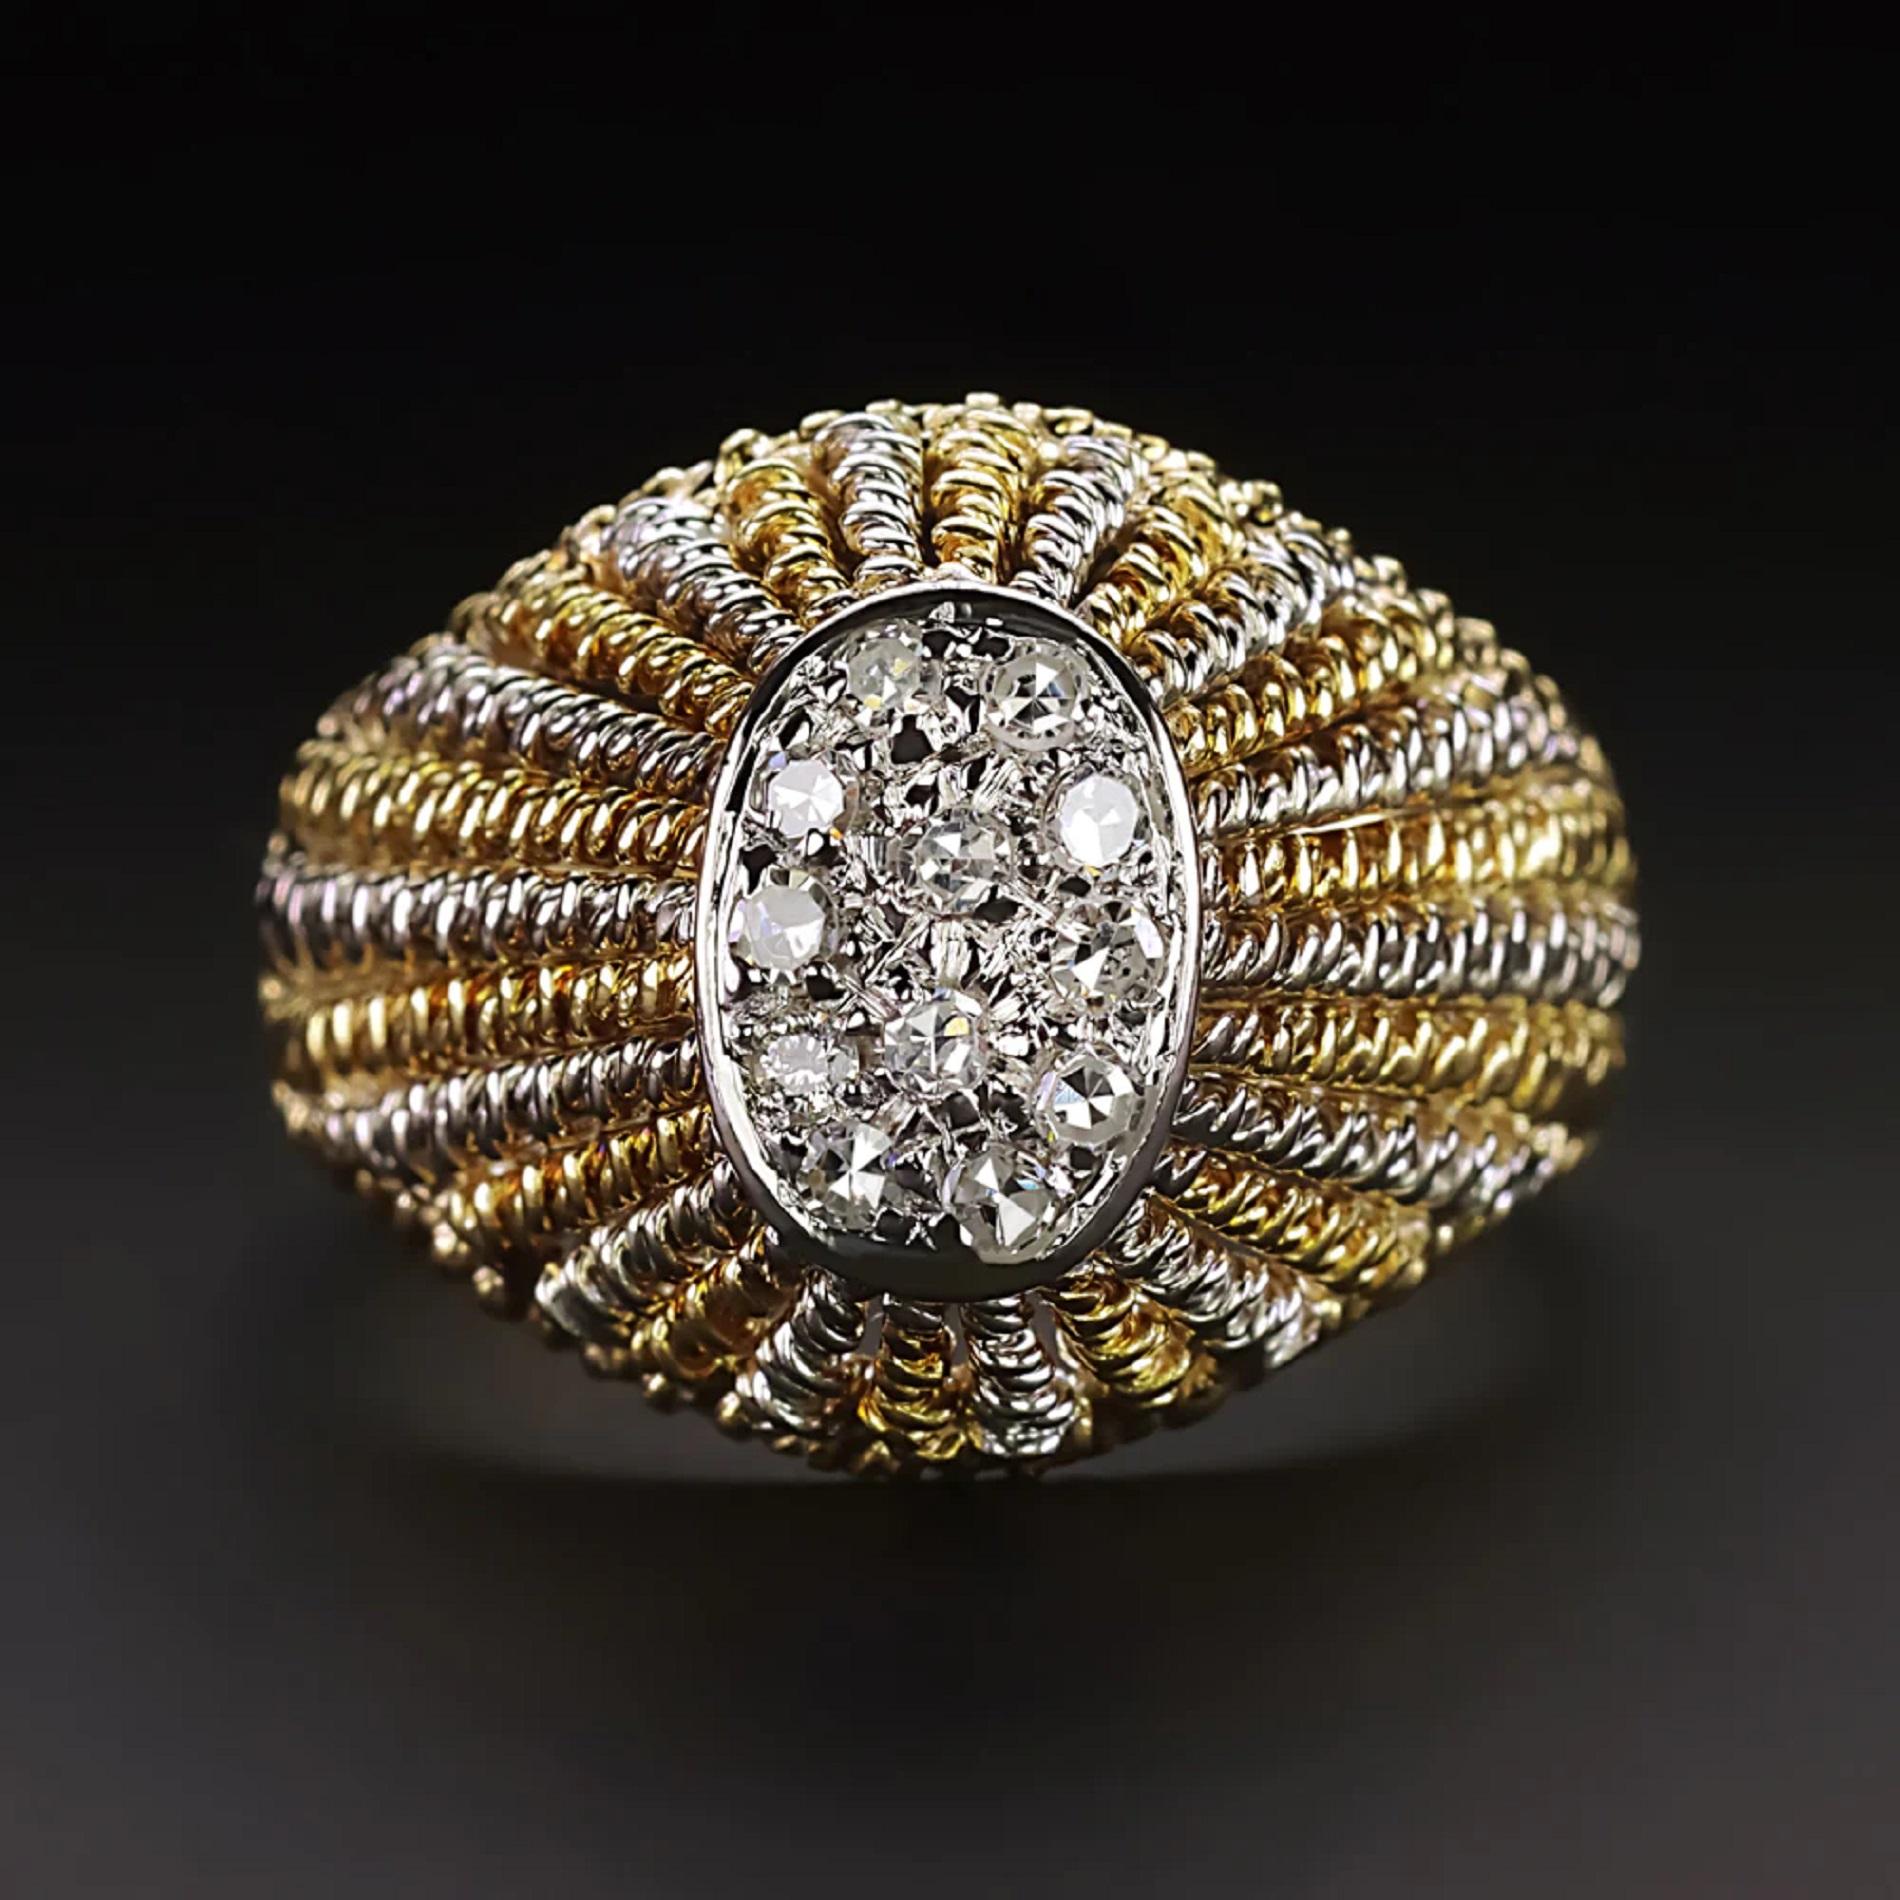 Art Deco Authentic Vintage Diamond Cocktail Ring For Sale